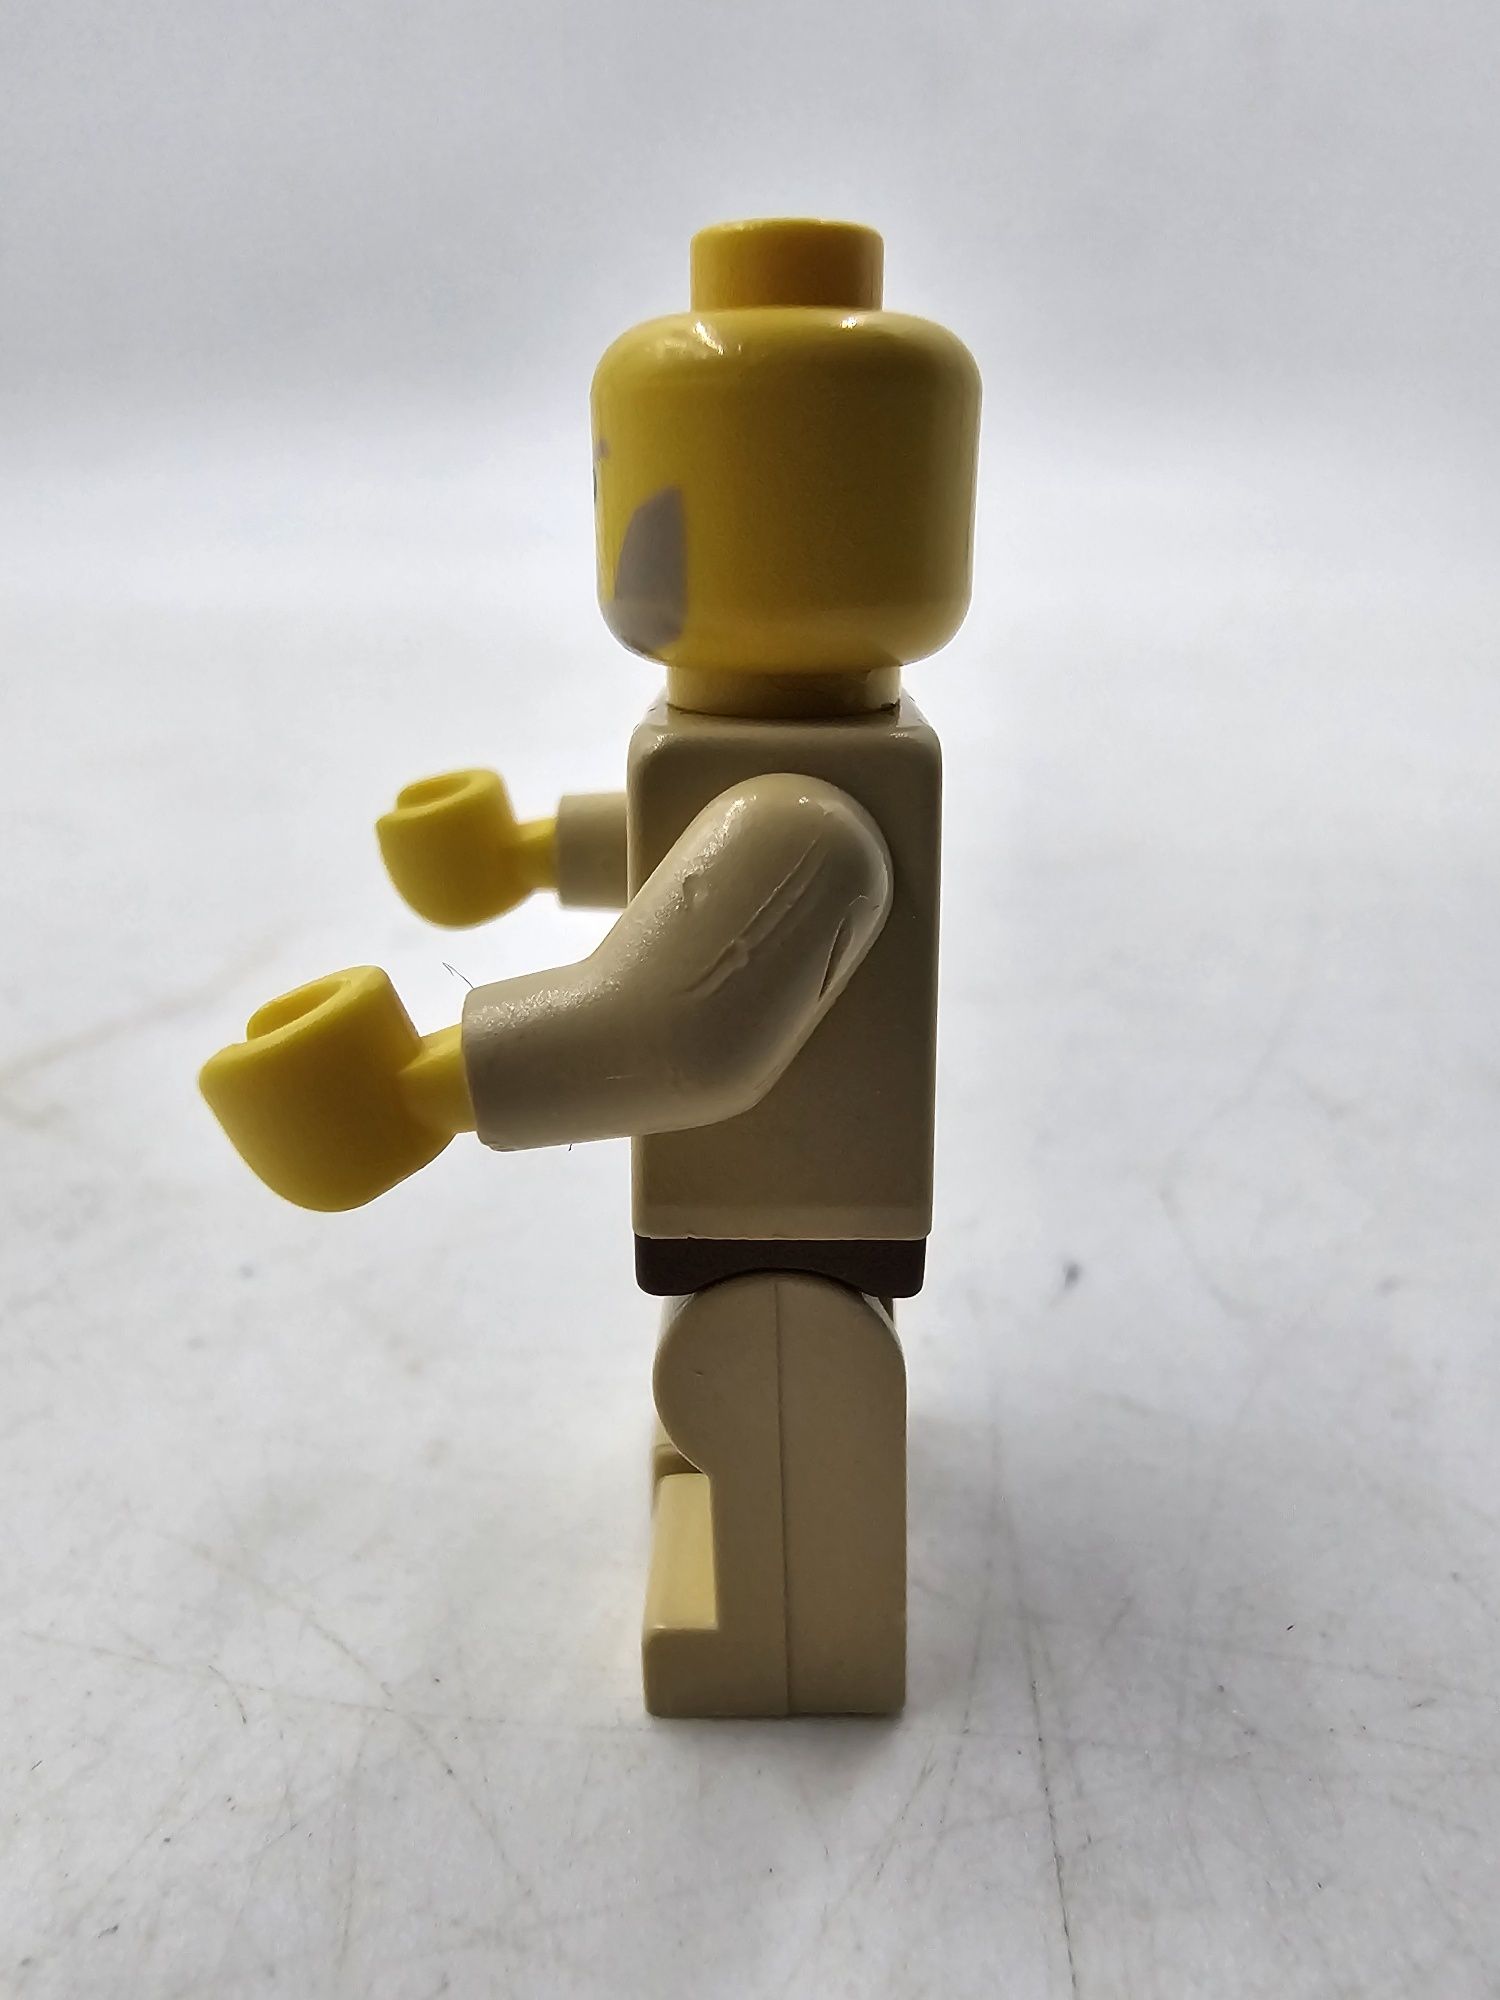 Obi-Wan Kenobi (sw023) - LEGO Star Wars minifigurka